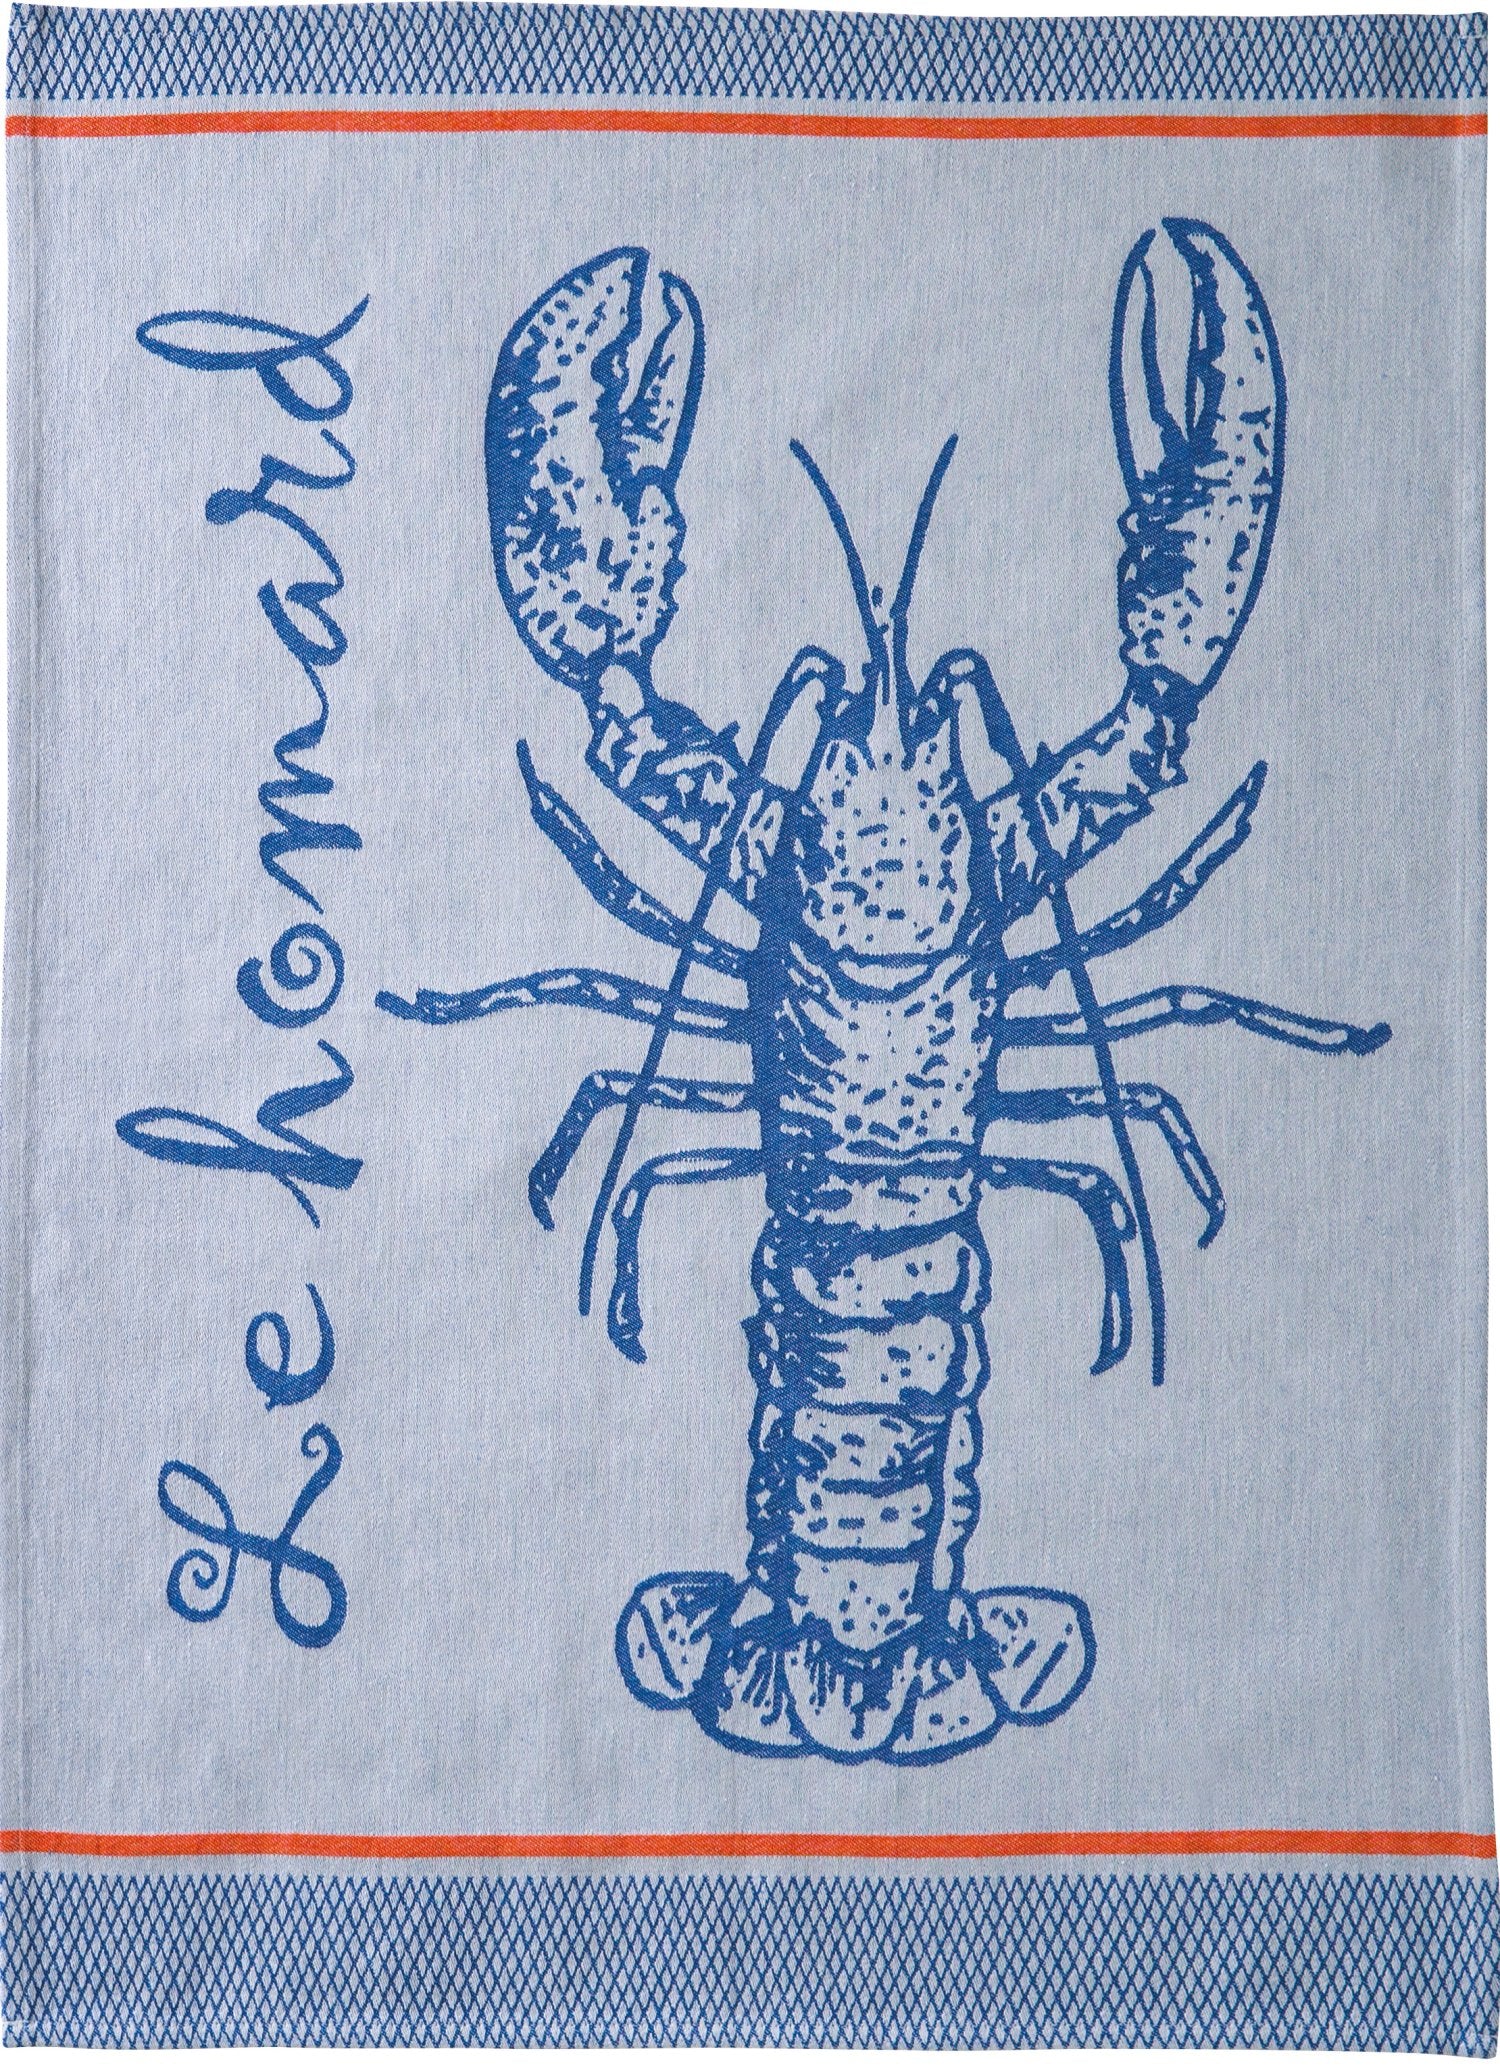 Coucke "Homard Bavoir Bleu", Woven cotton lobster bib. Designed in France.